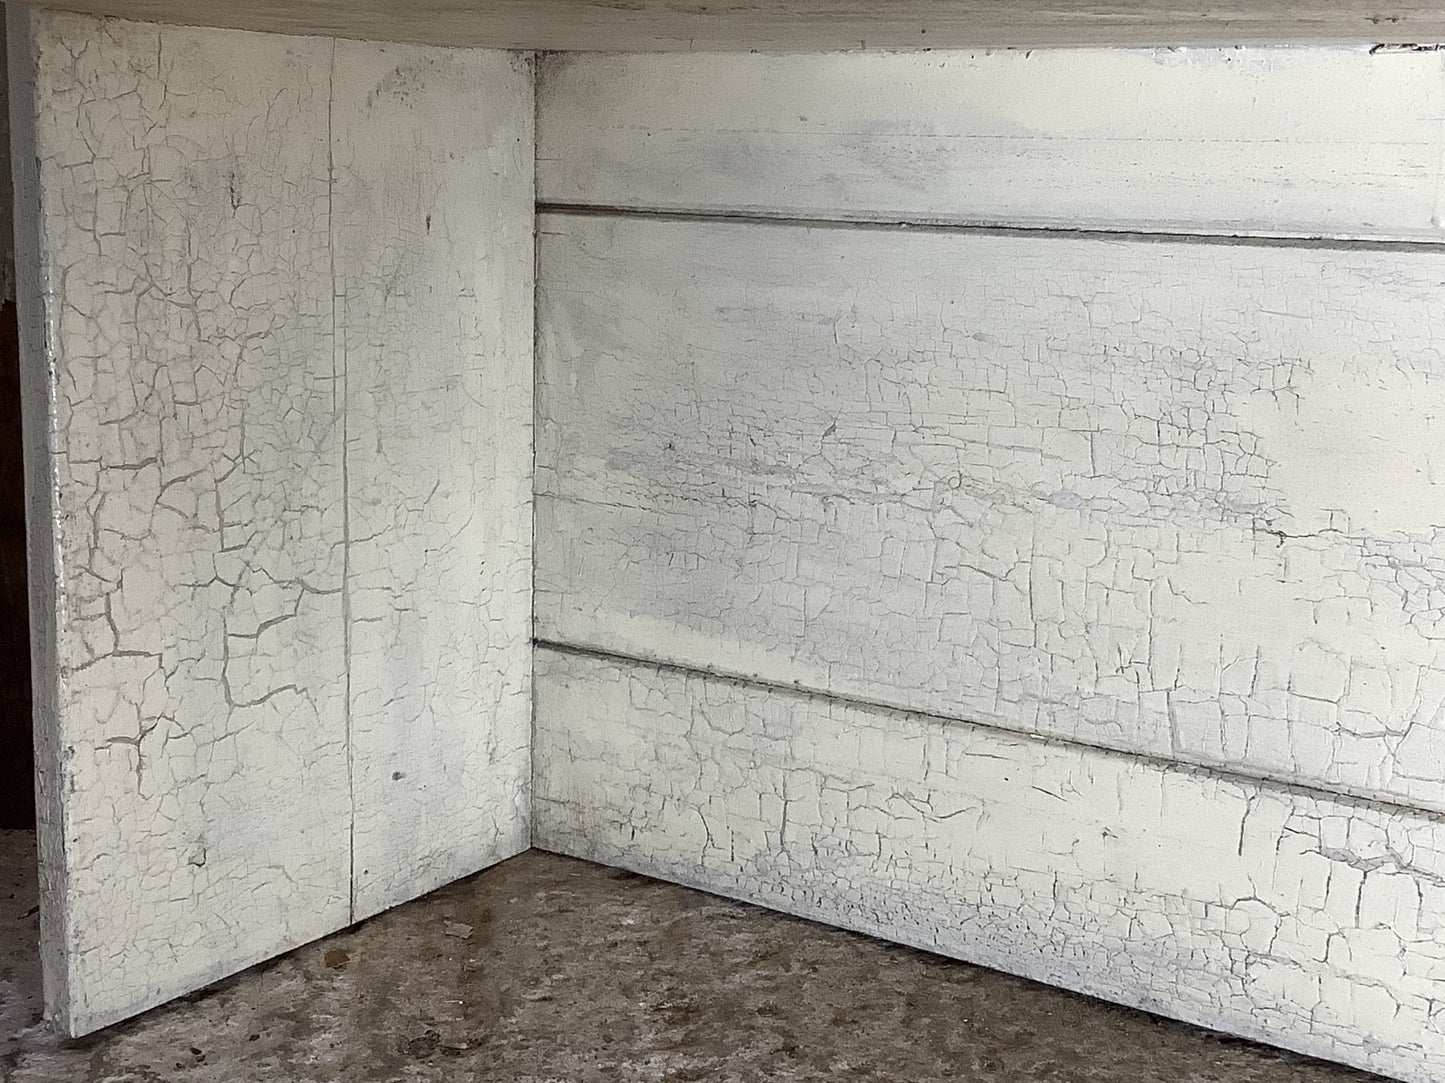 2’6 Reclaimed Single Shelf Crackled Cream Painted Pine Shelving Unit